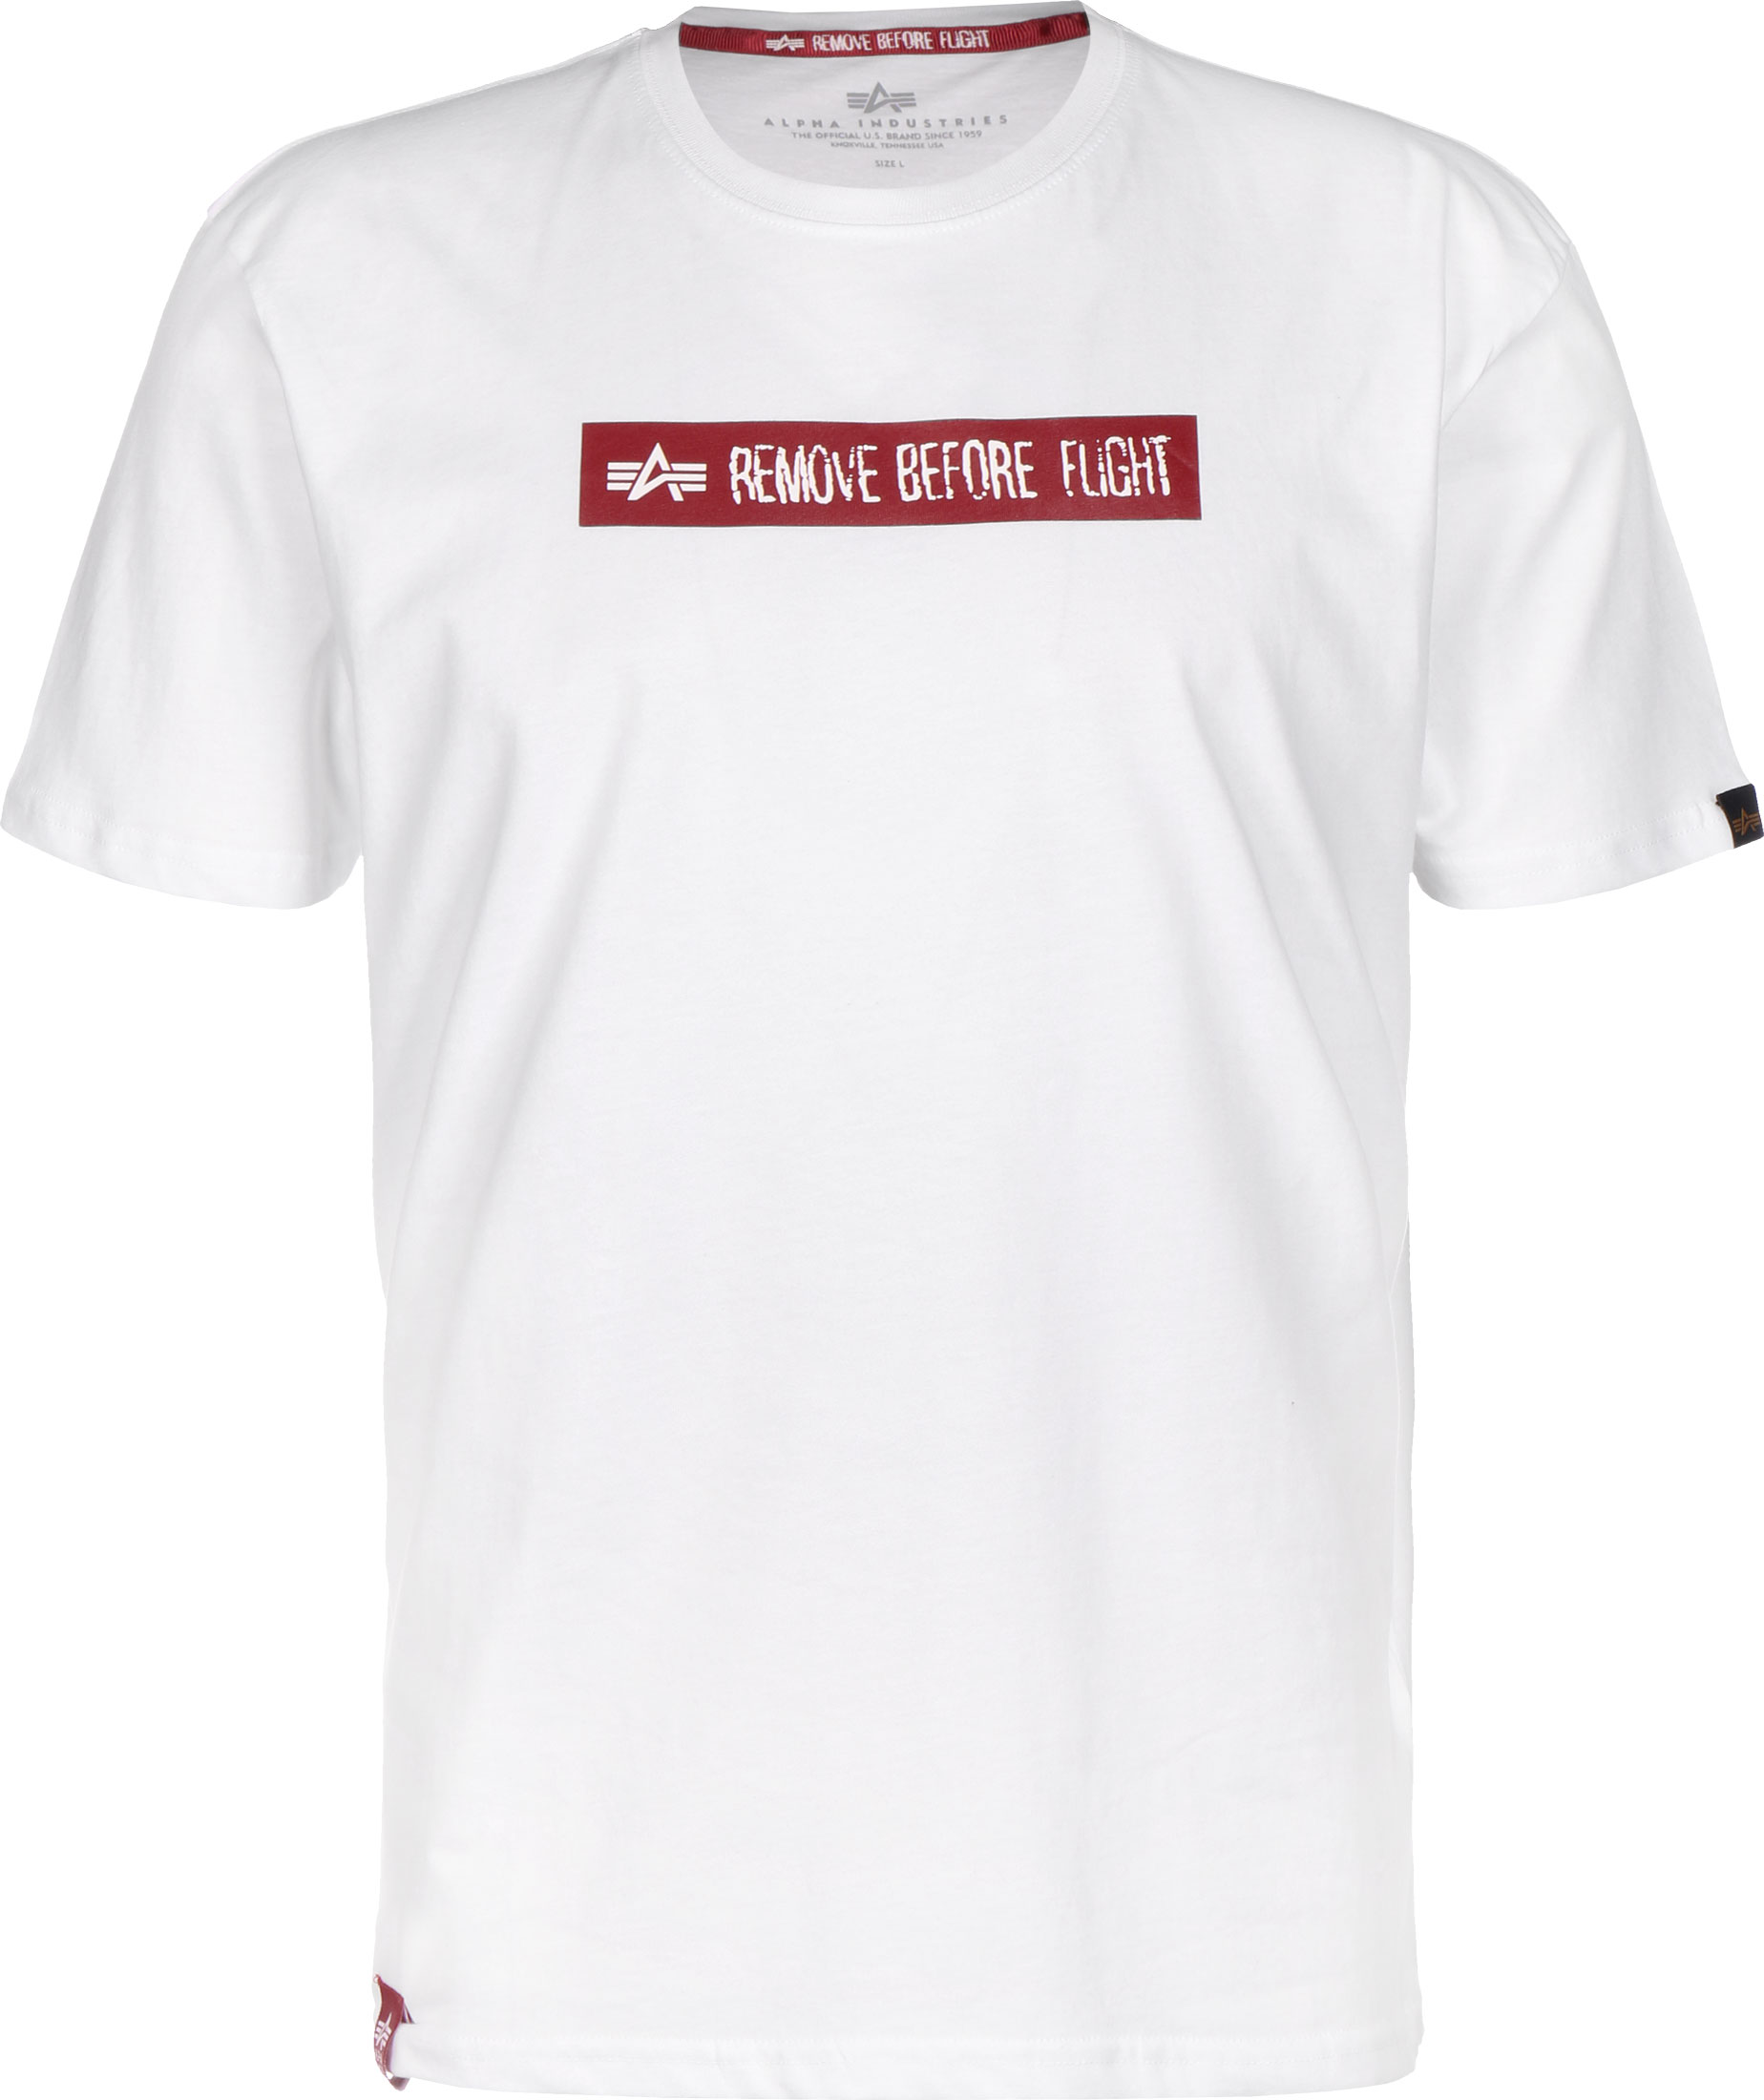 Alpha Industries RBF Latex Print T-Shirt - White (128513/03) - The 515